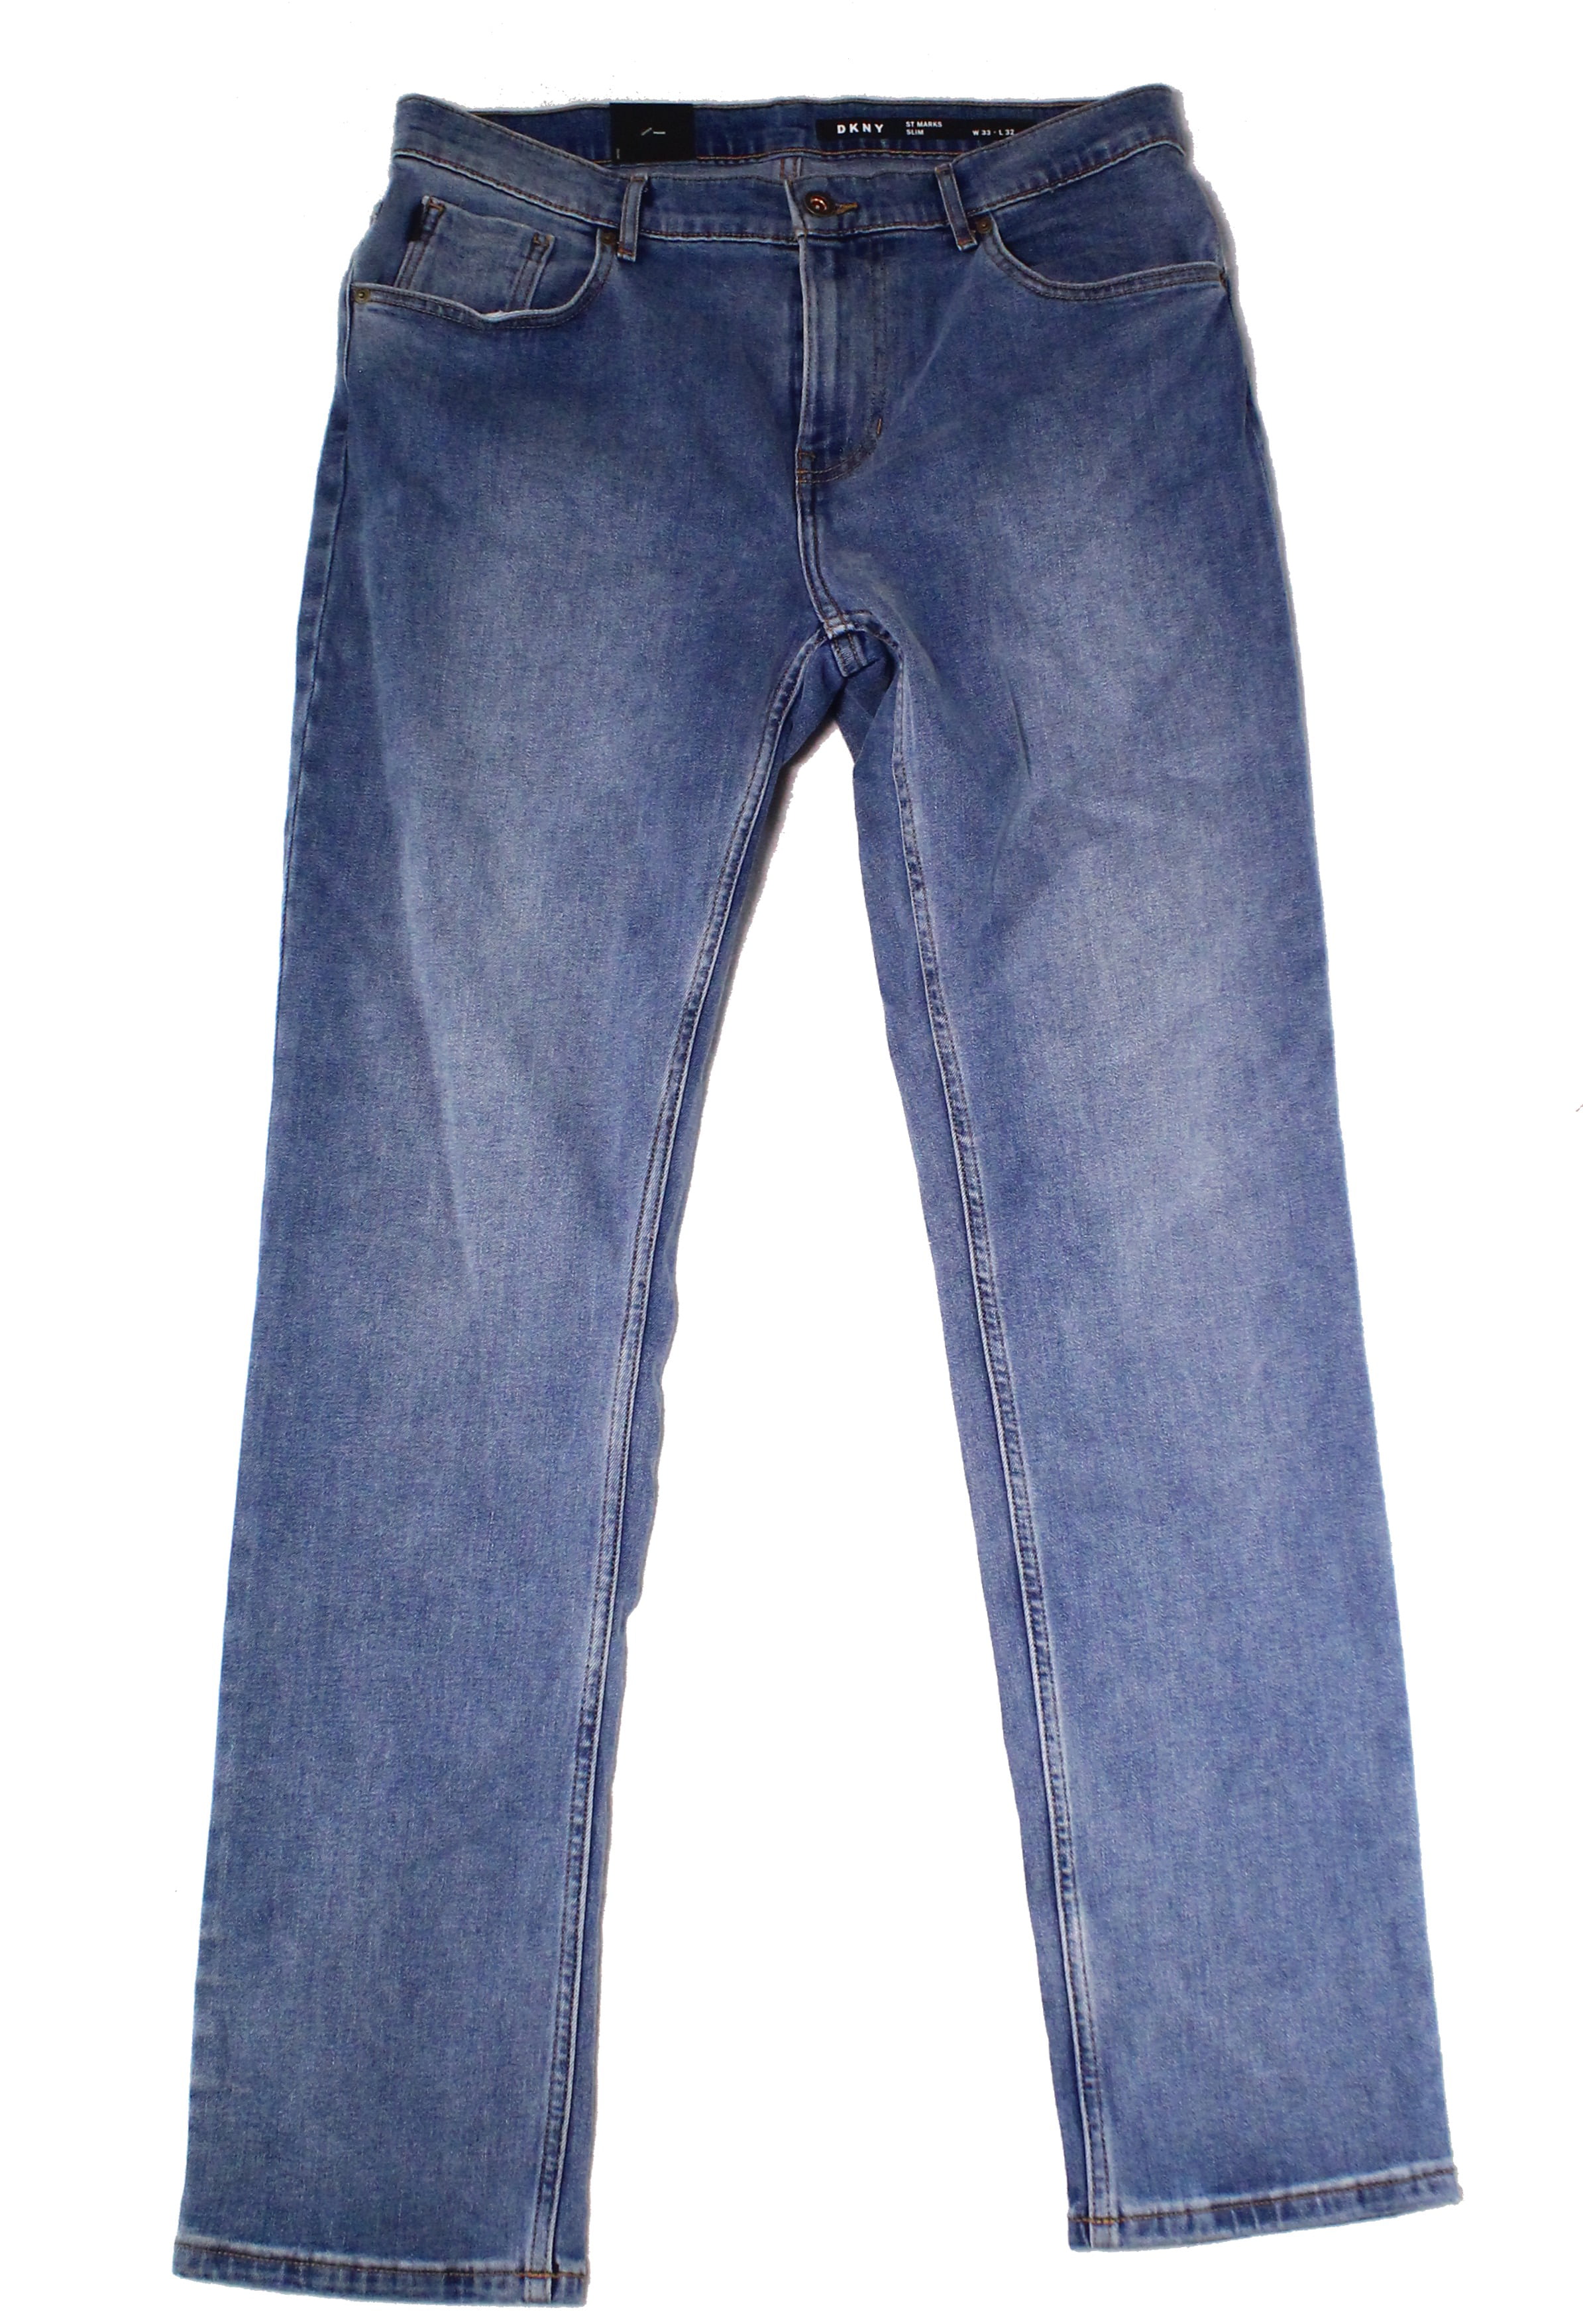 DKNY - Mens 33x32 Classic Straight Leg Stretch Jeans 33 - Walmart.com ...